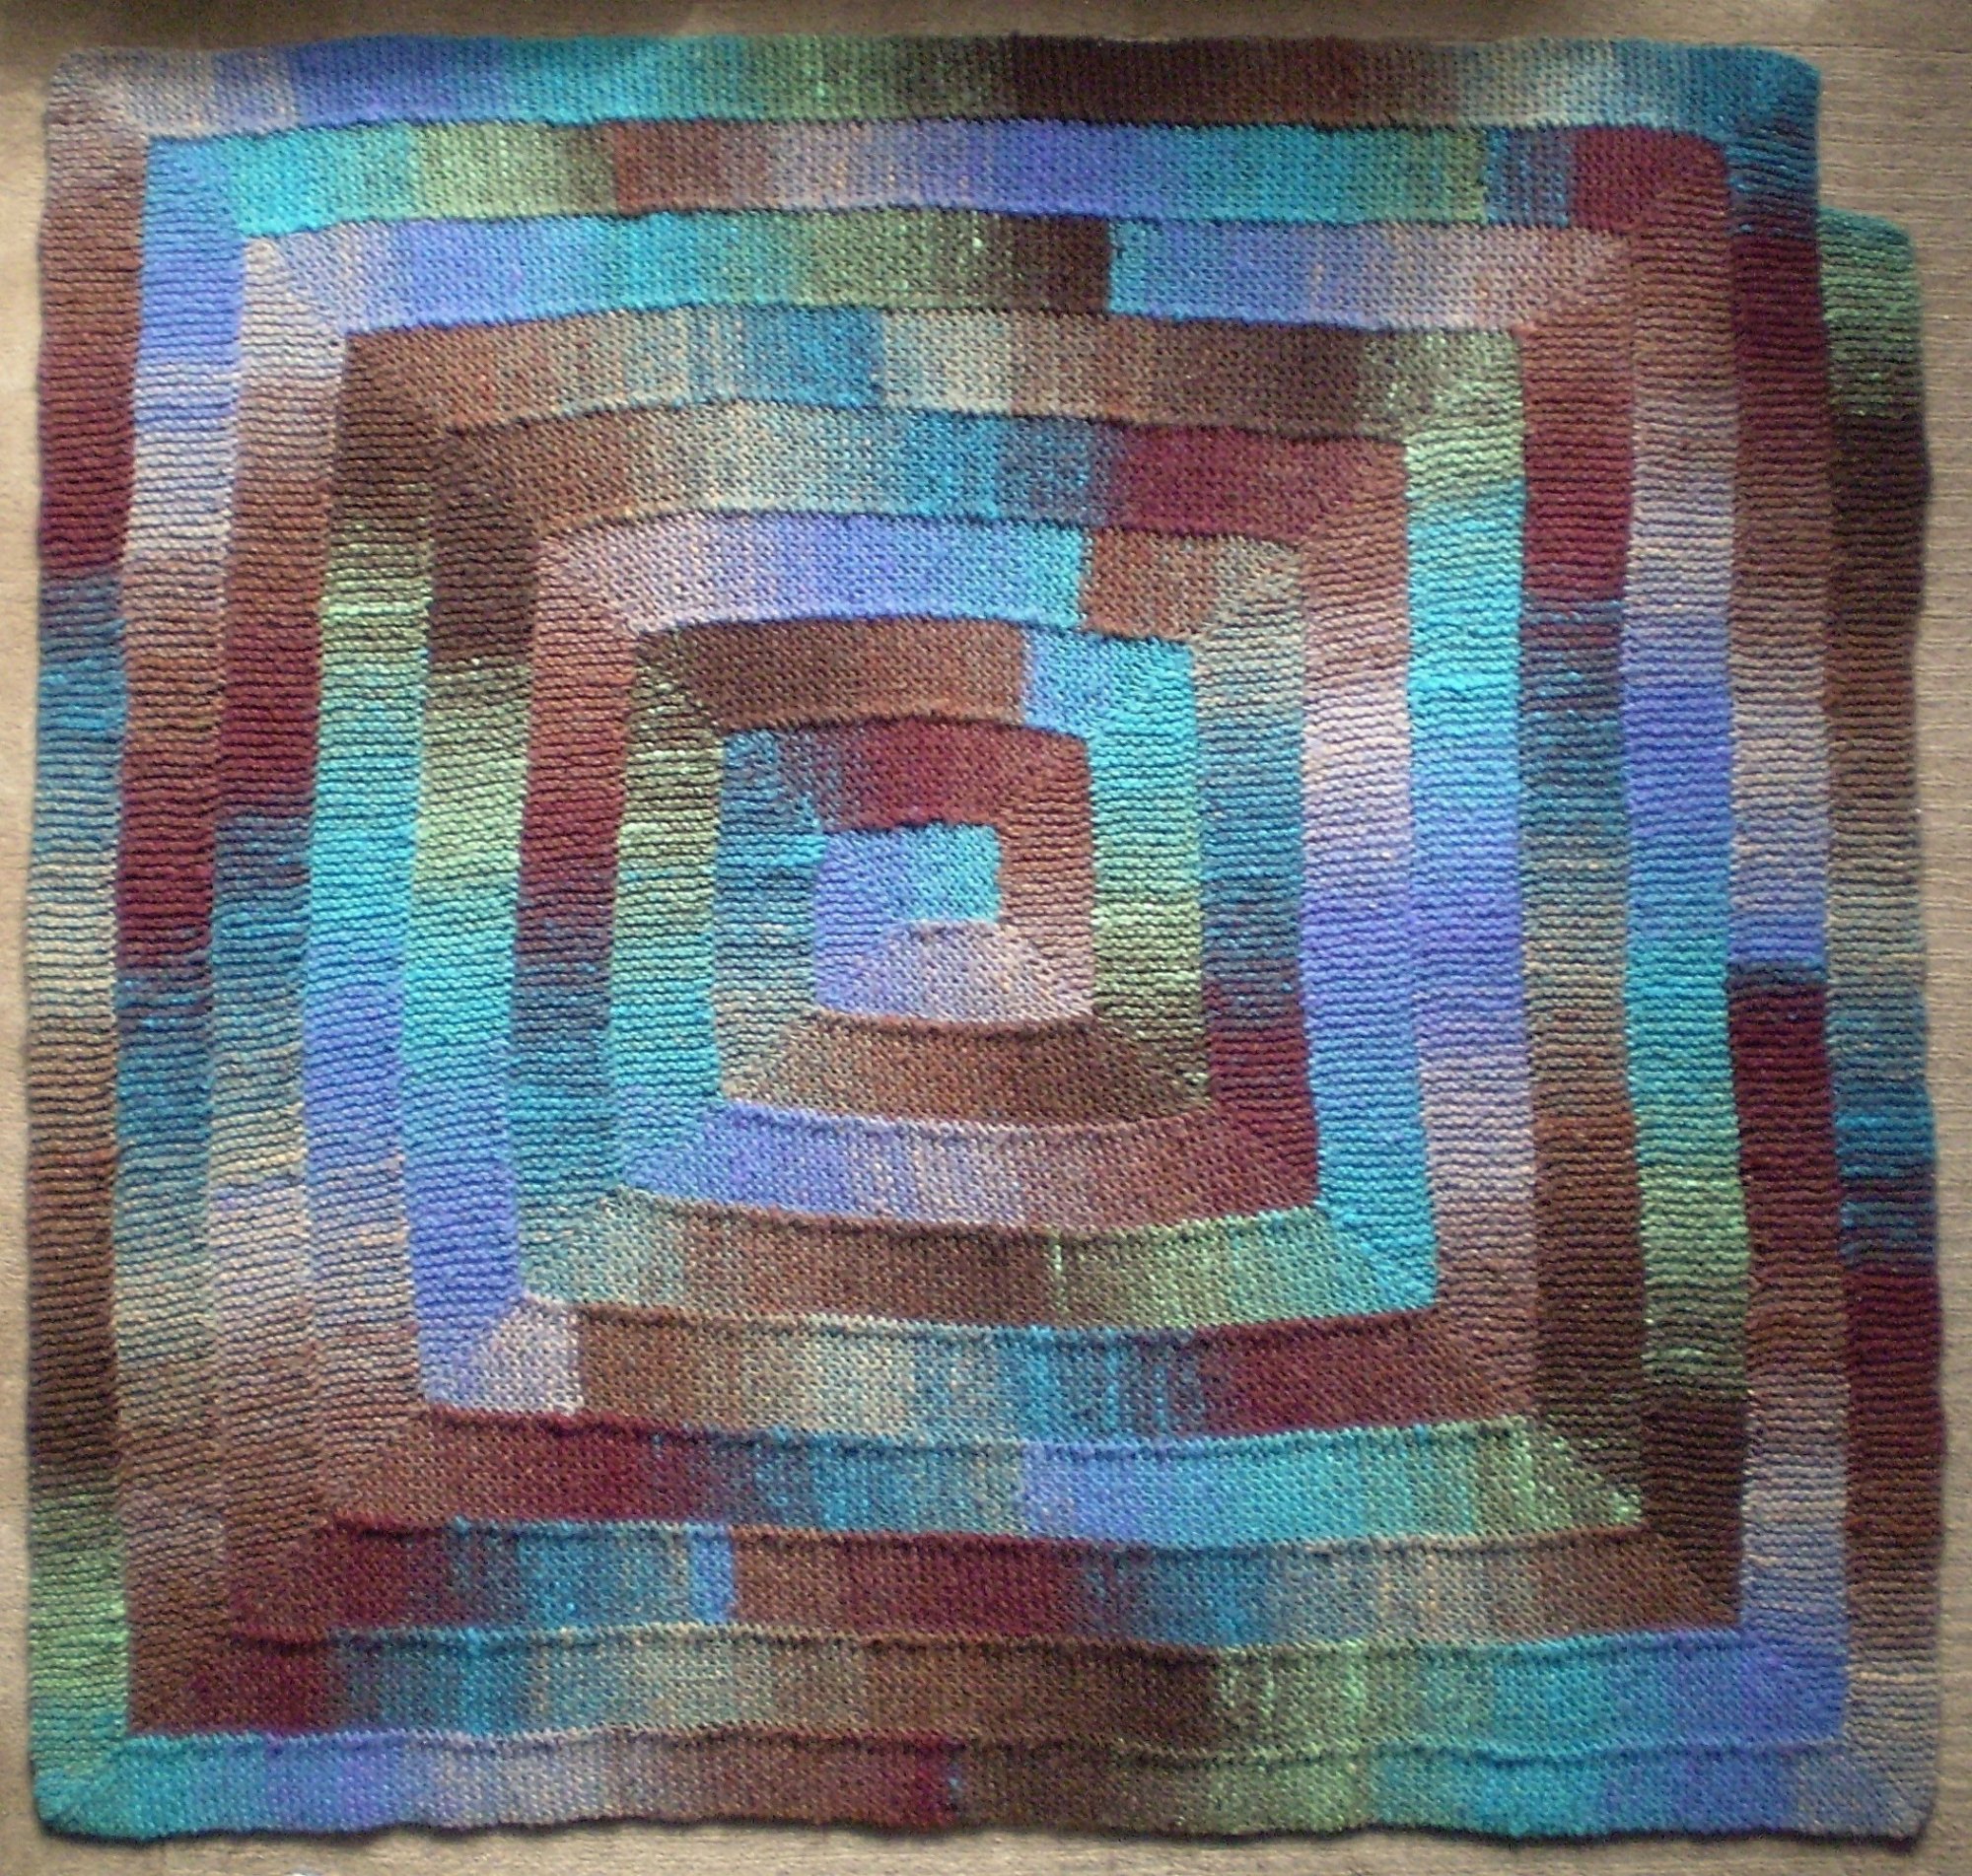 Ten stitch blanket crochet